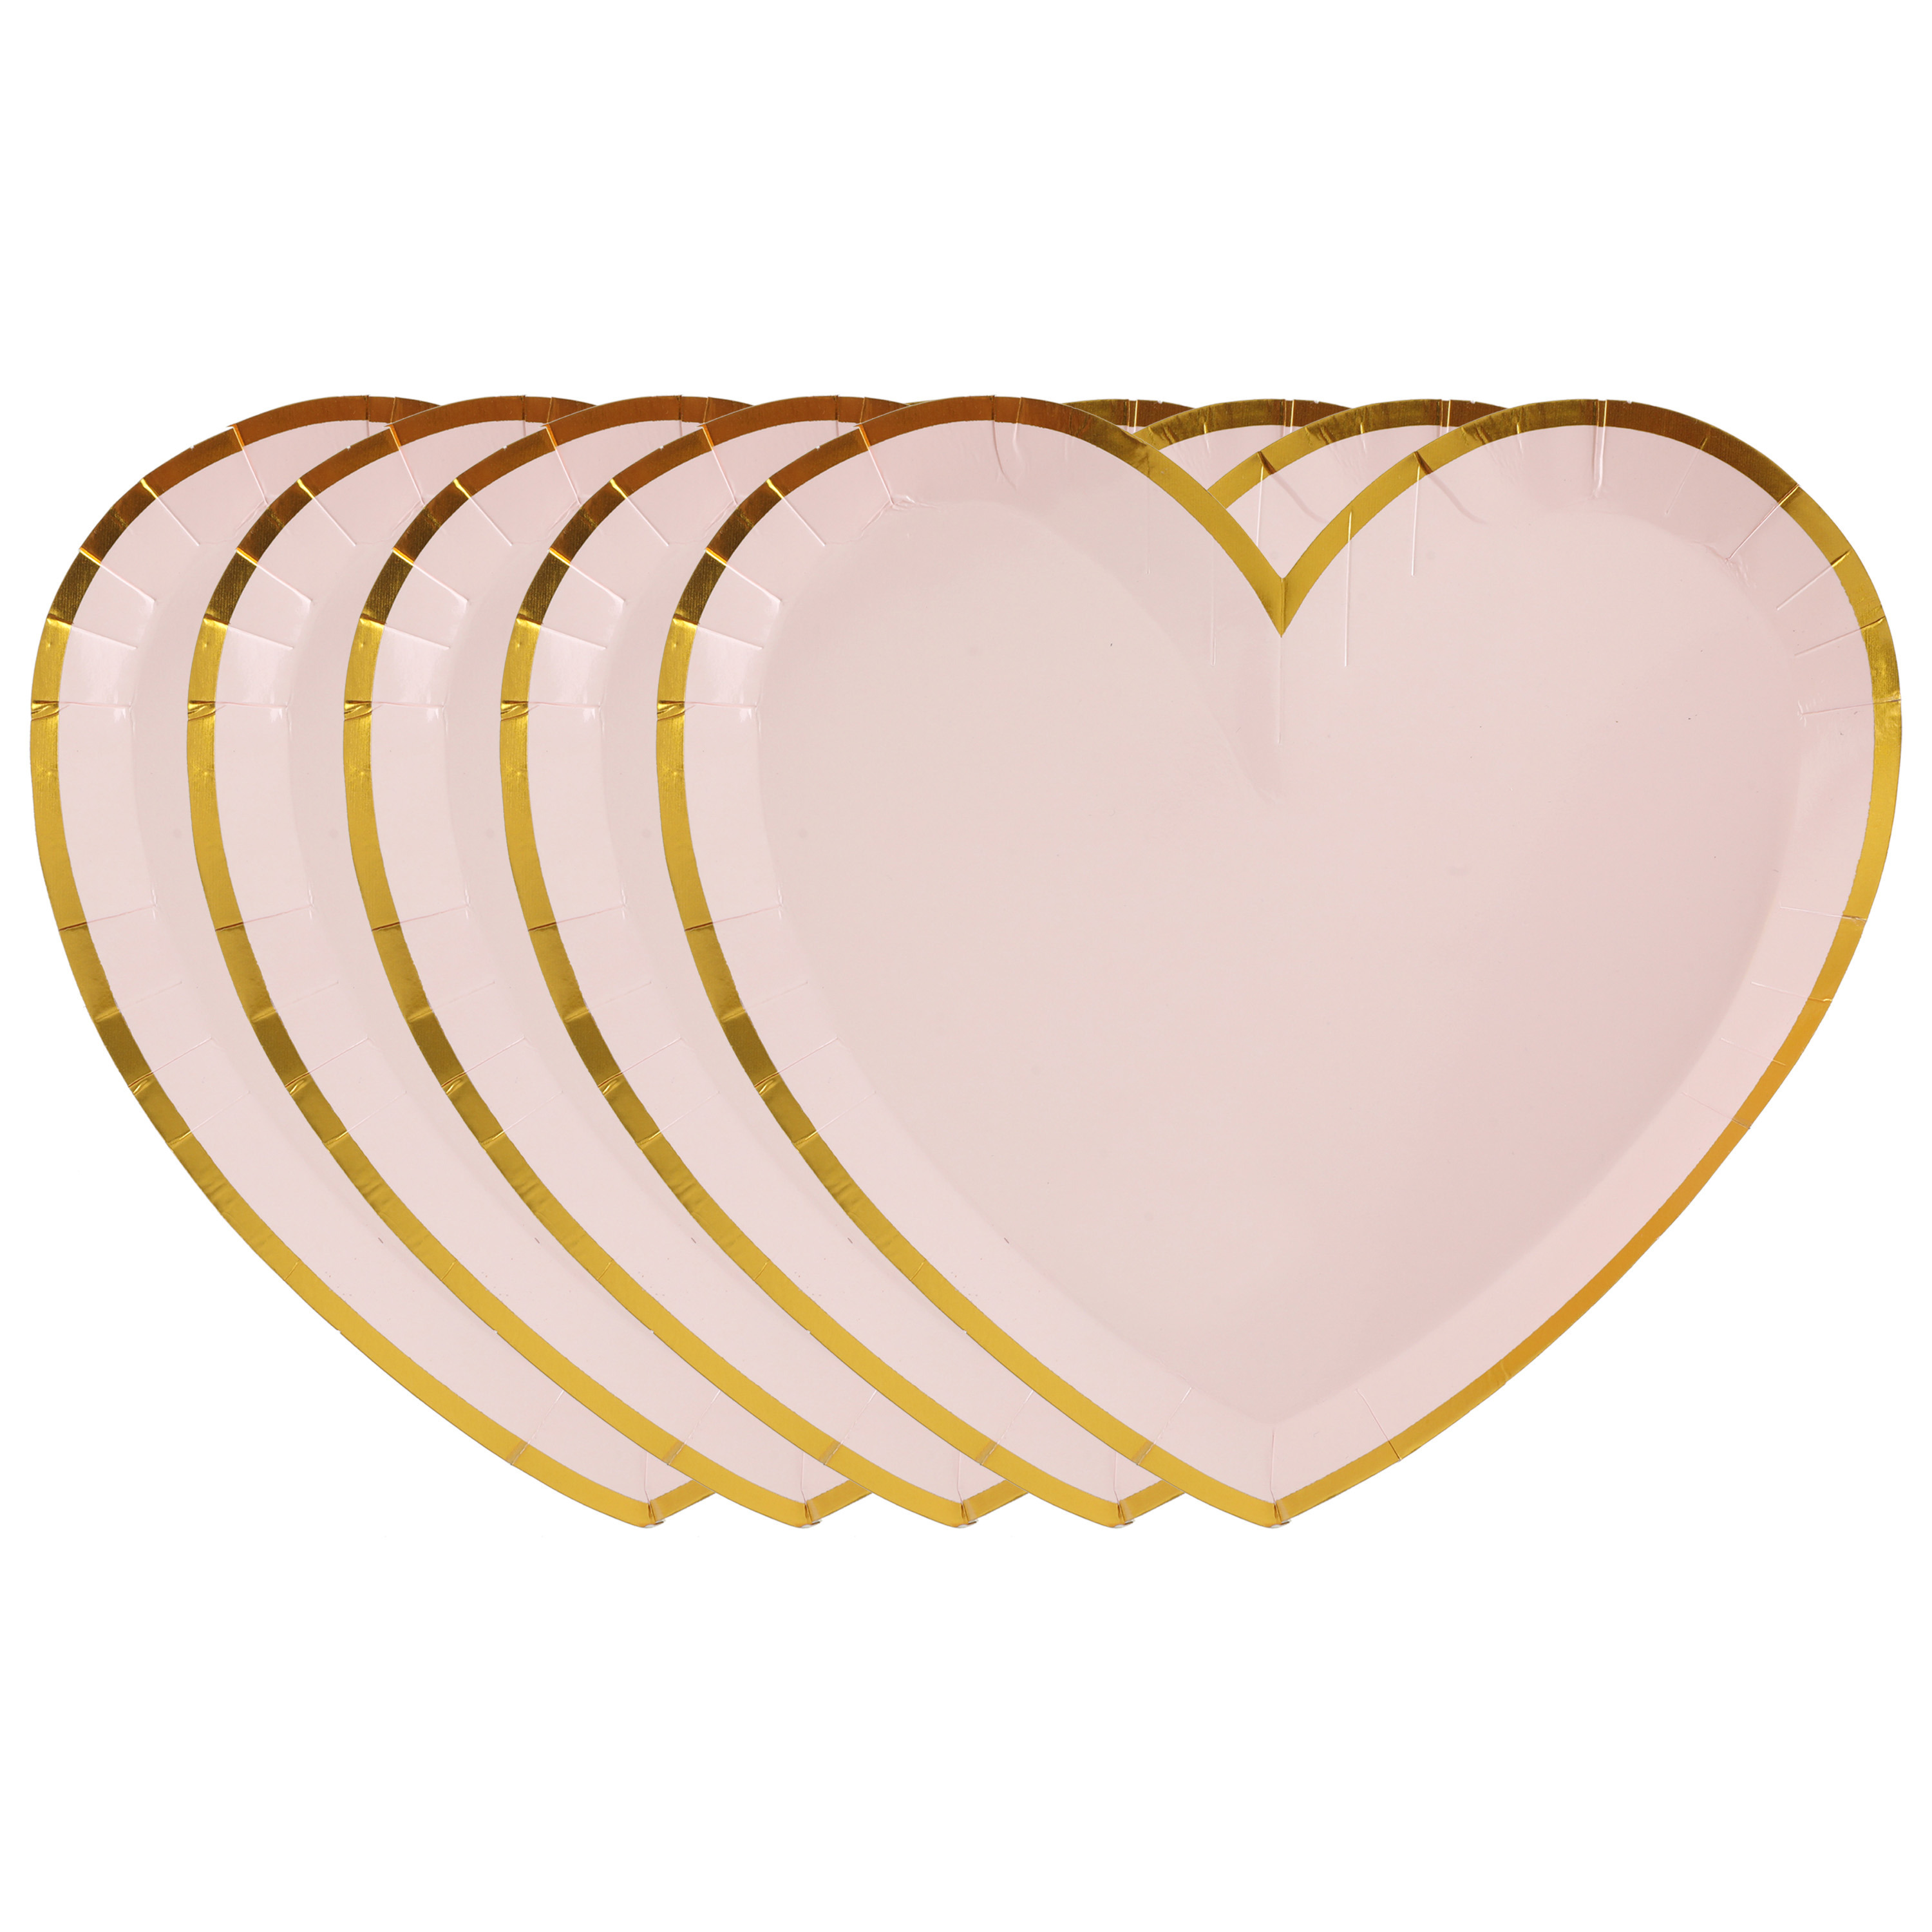 Santex feest wegwerpbordjes - hartje - 50x stuks - 23 cm - roze/goud